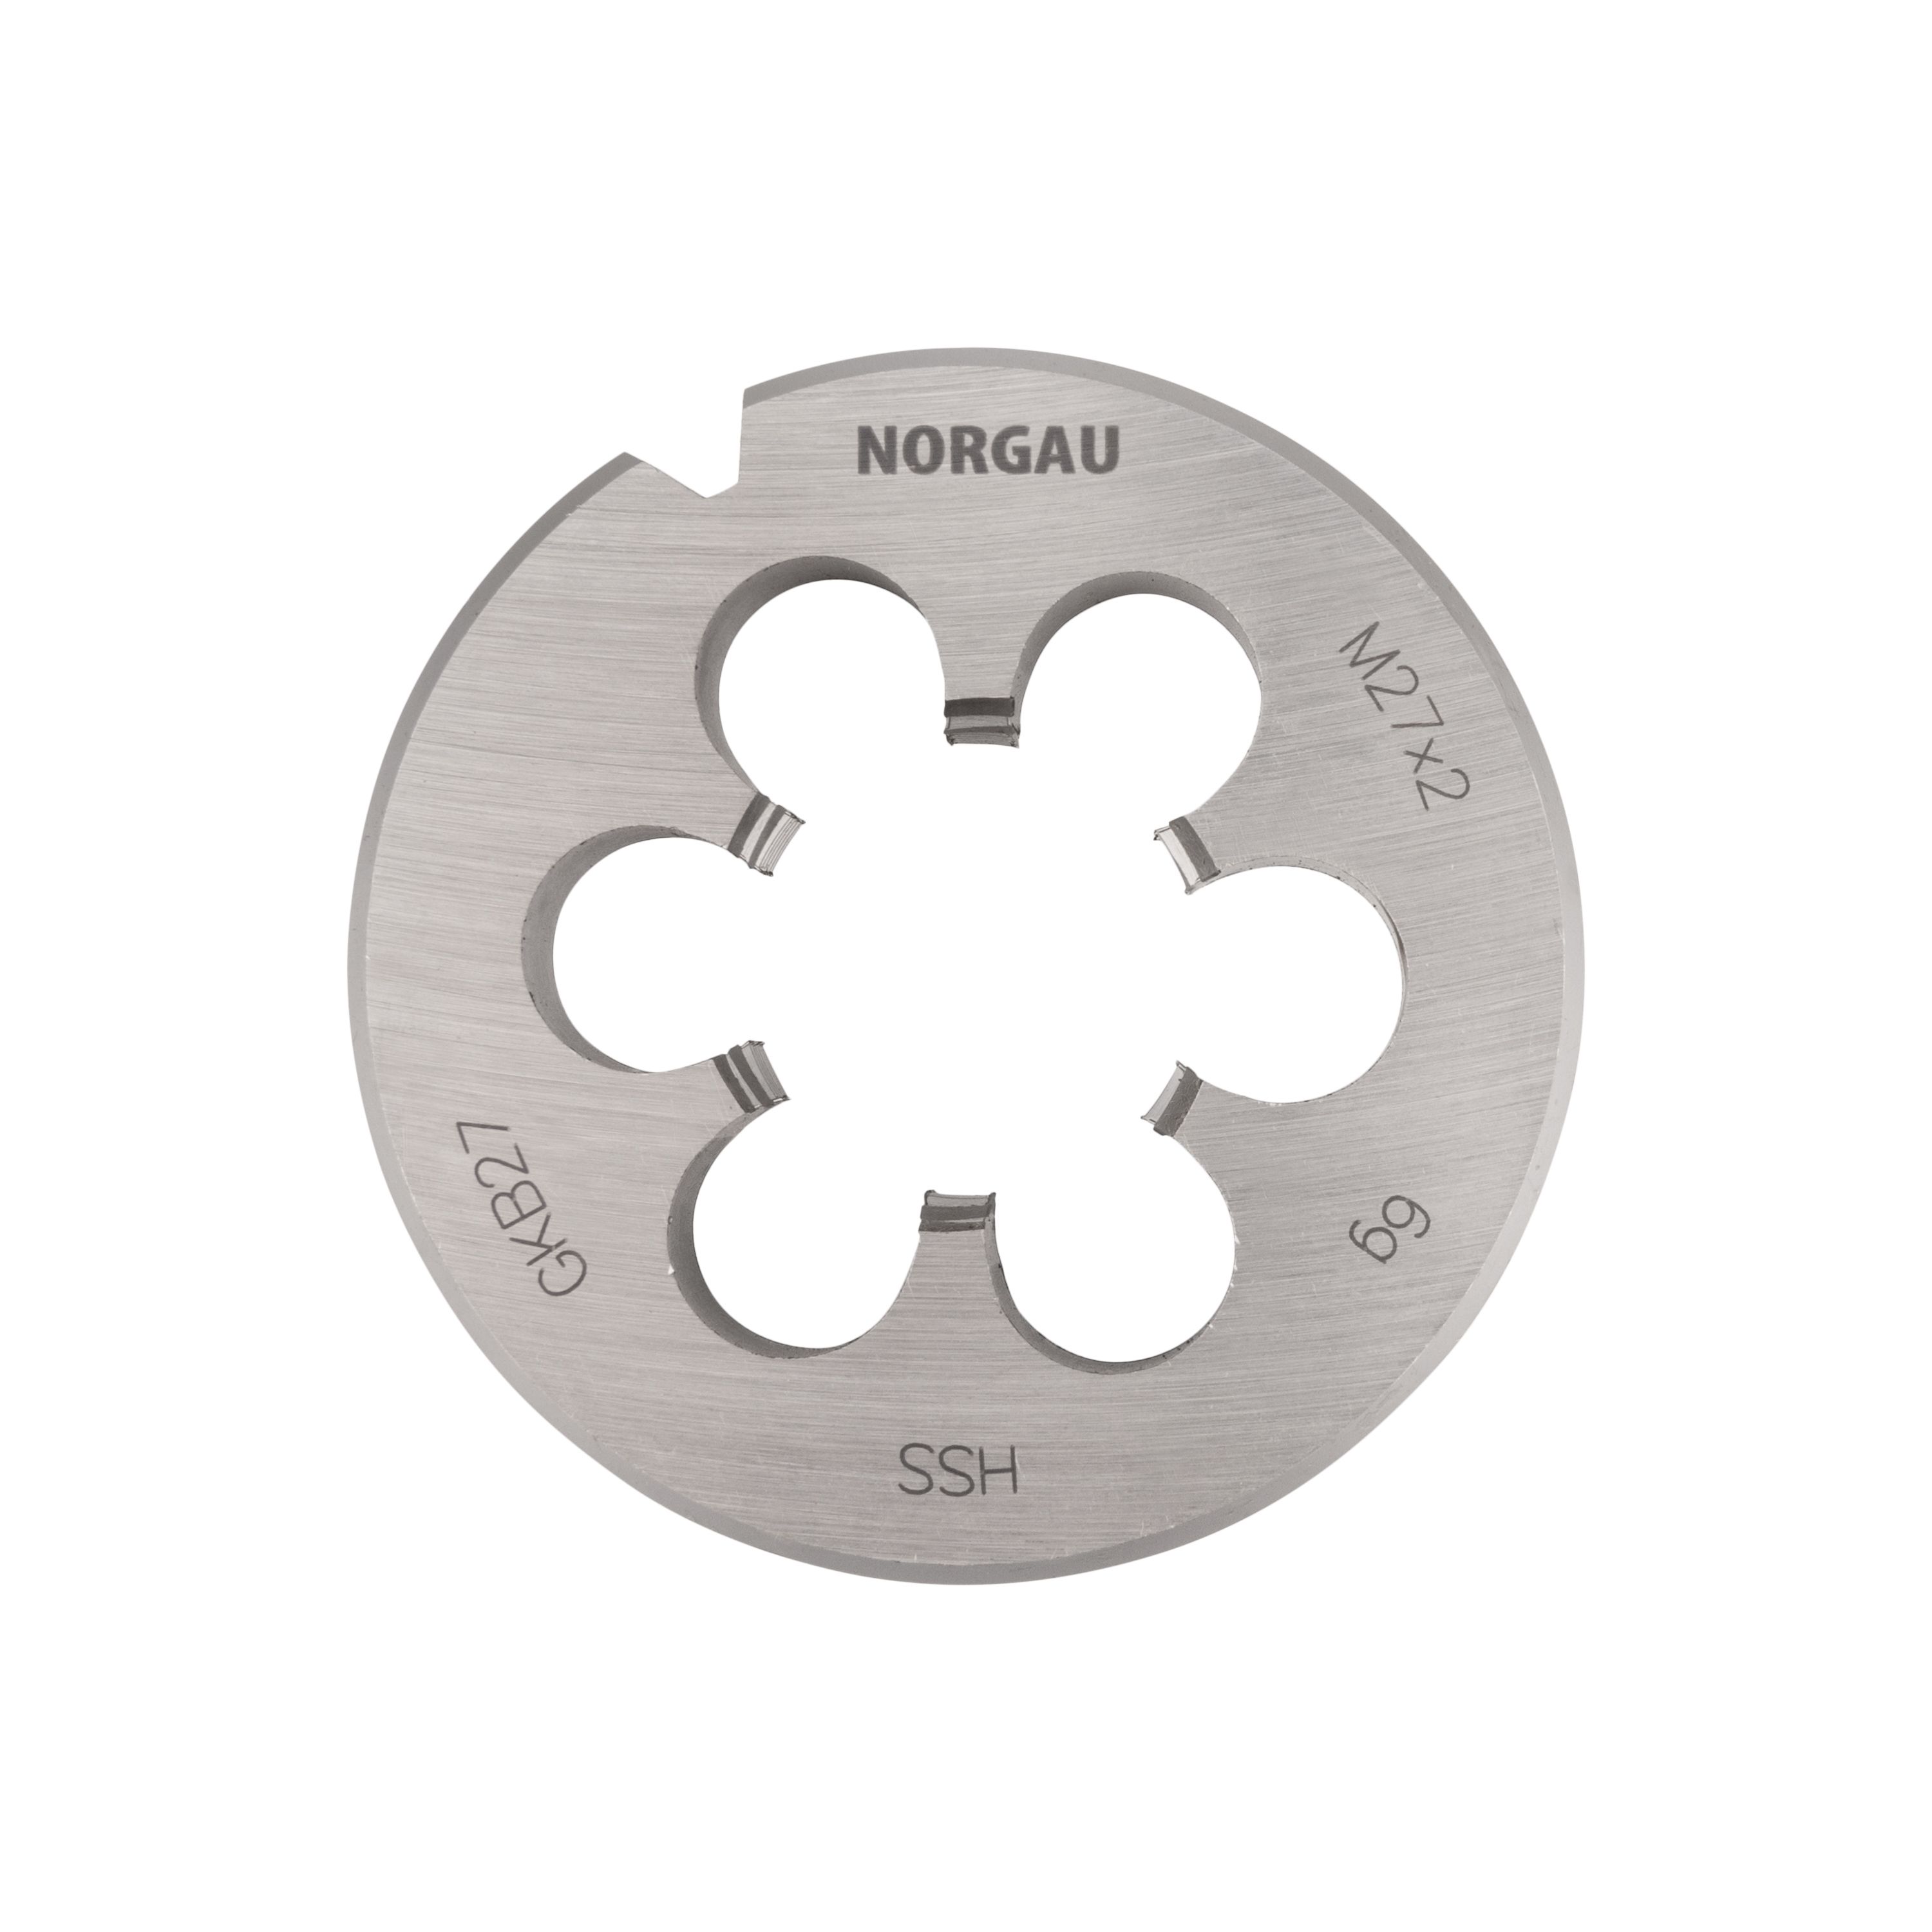 Плашка NORGAU Industrial MF27x2х65 мм. метрическая, угол 60, по DIN223, HSS плашка м16х2 мм norgau industrial метрическая угол 60° по din223 hss